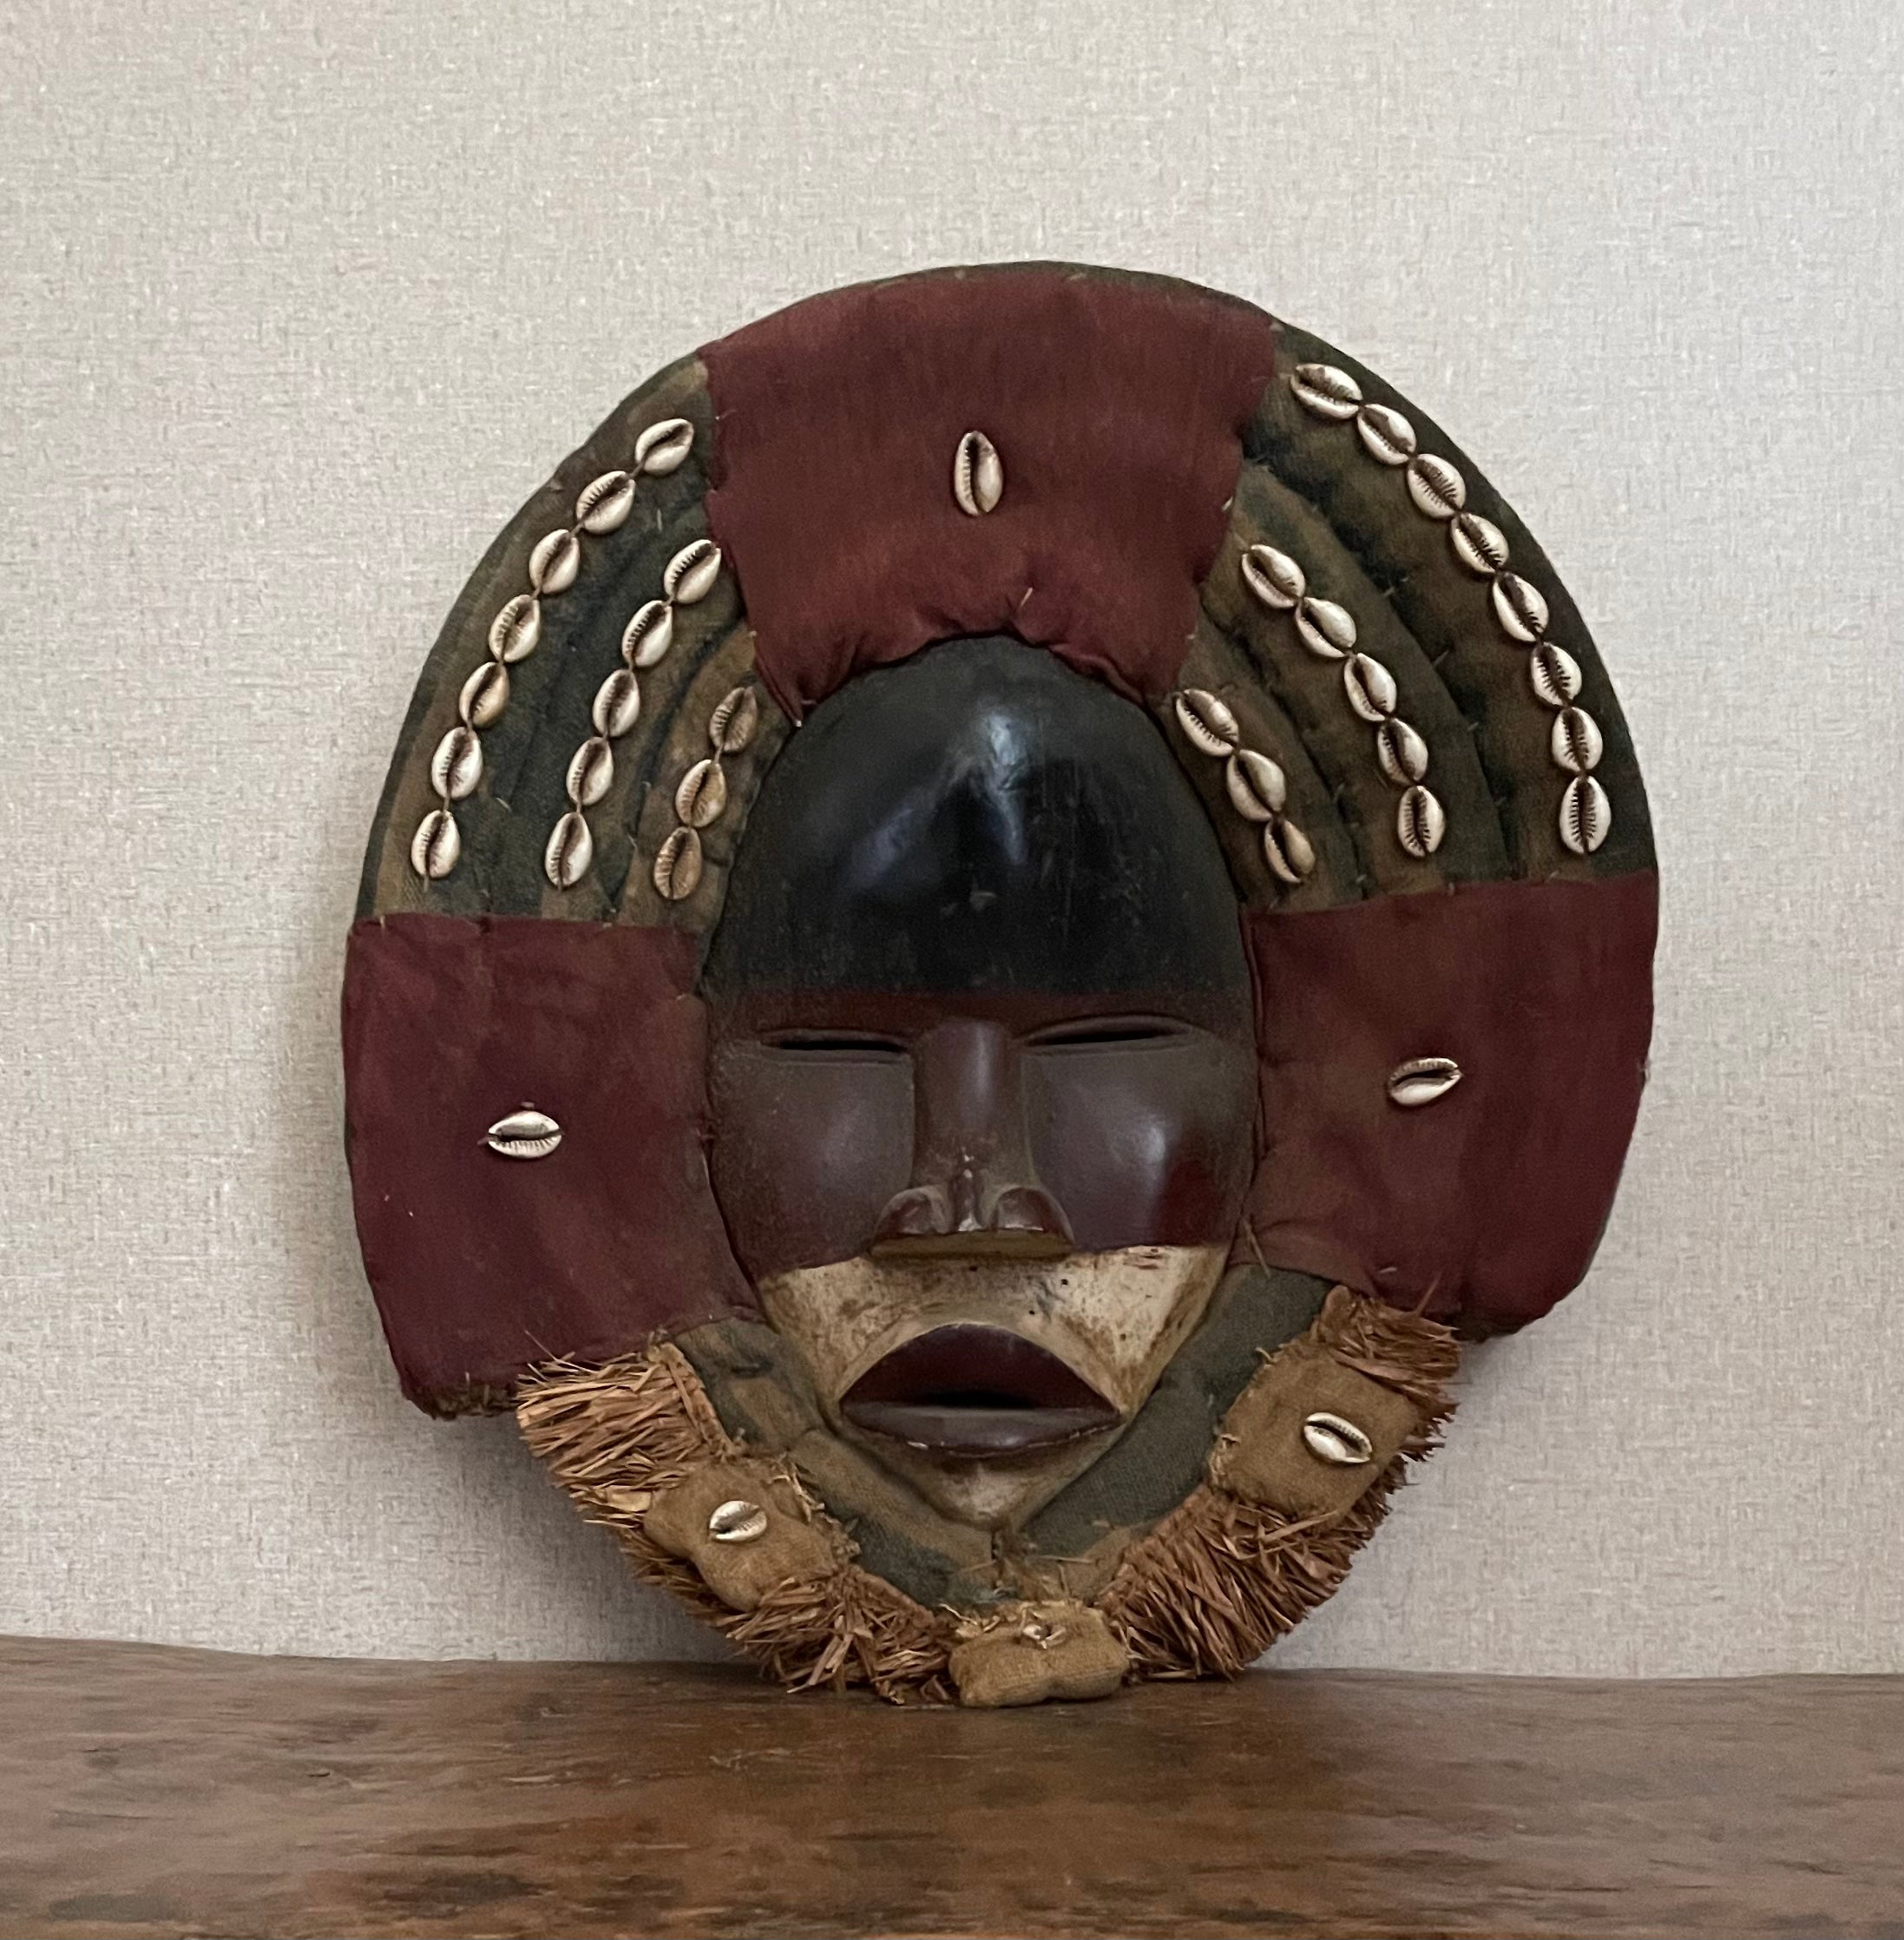 Handcrafted Masks - Handmade - Contemporary -  African Art - Home Decor - Wall -  Artwork - Sculpture -  Wood - Vintage -  Dan